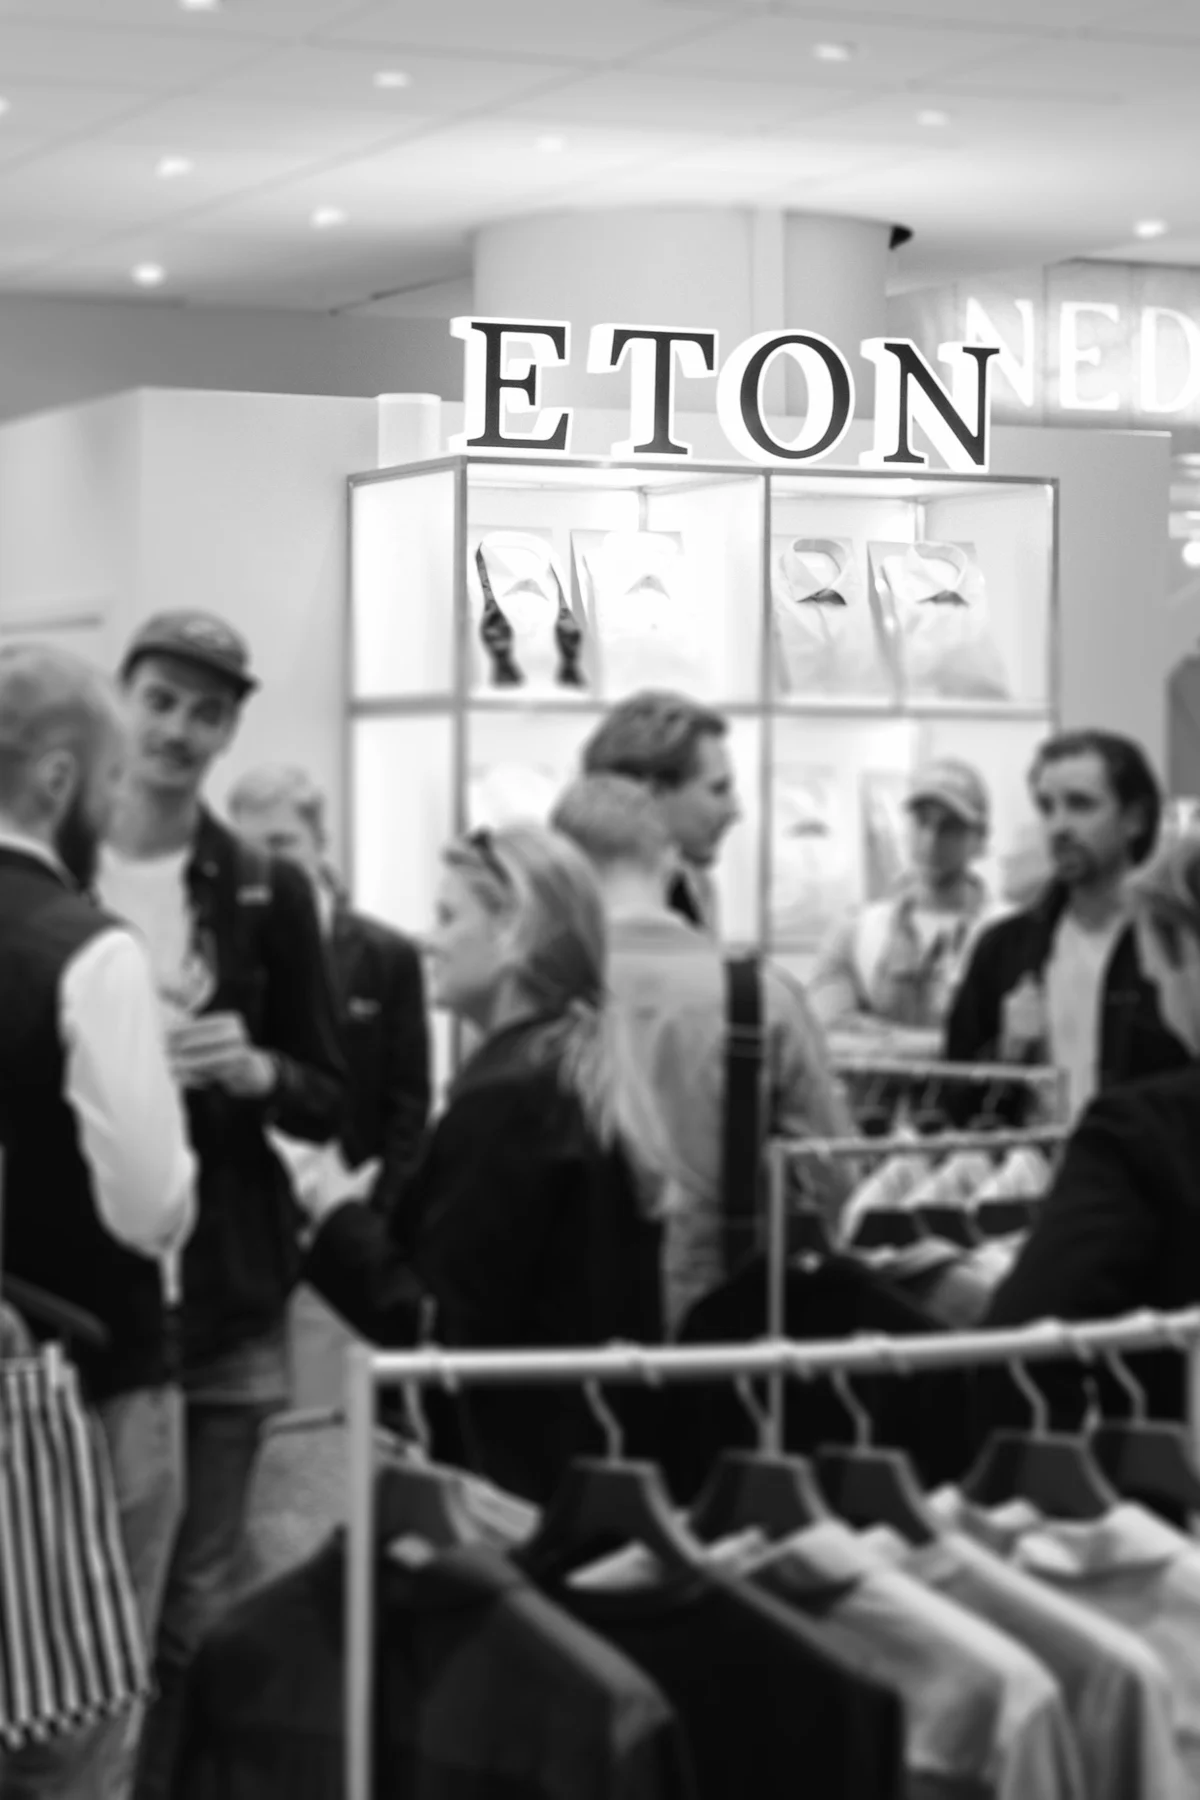 eton store with people mingle